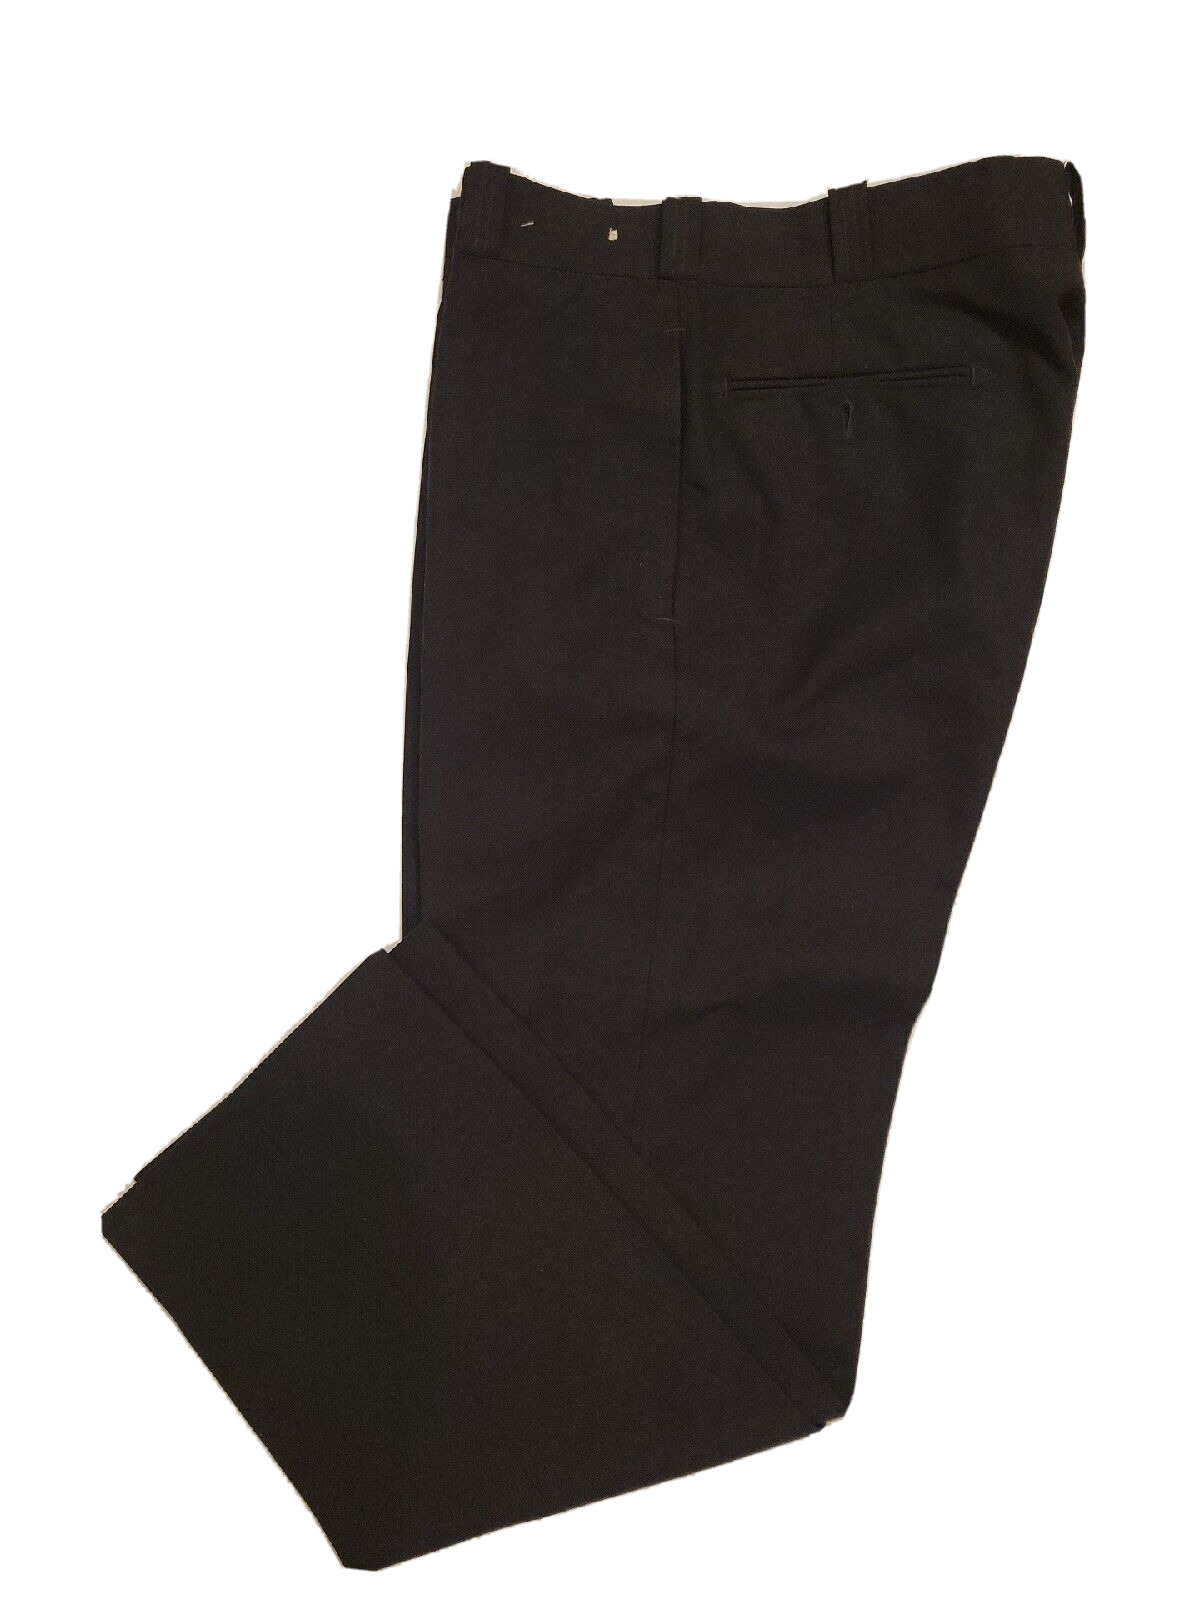 Vintage 1980 US Firemans Firefighter Black Wool Dress Uniform Slacks Pants 34x30